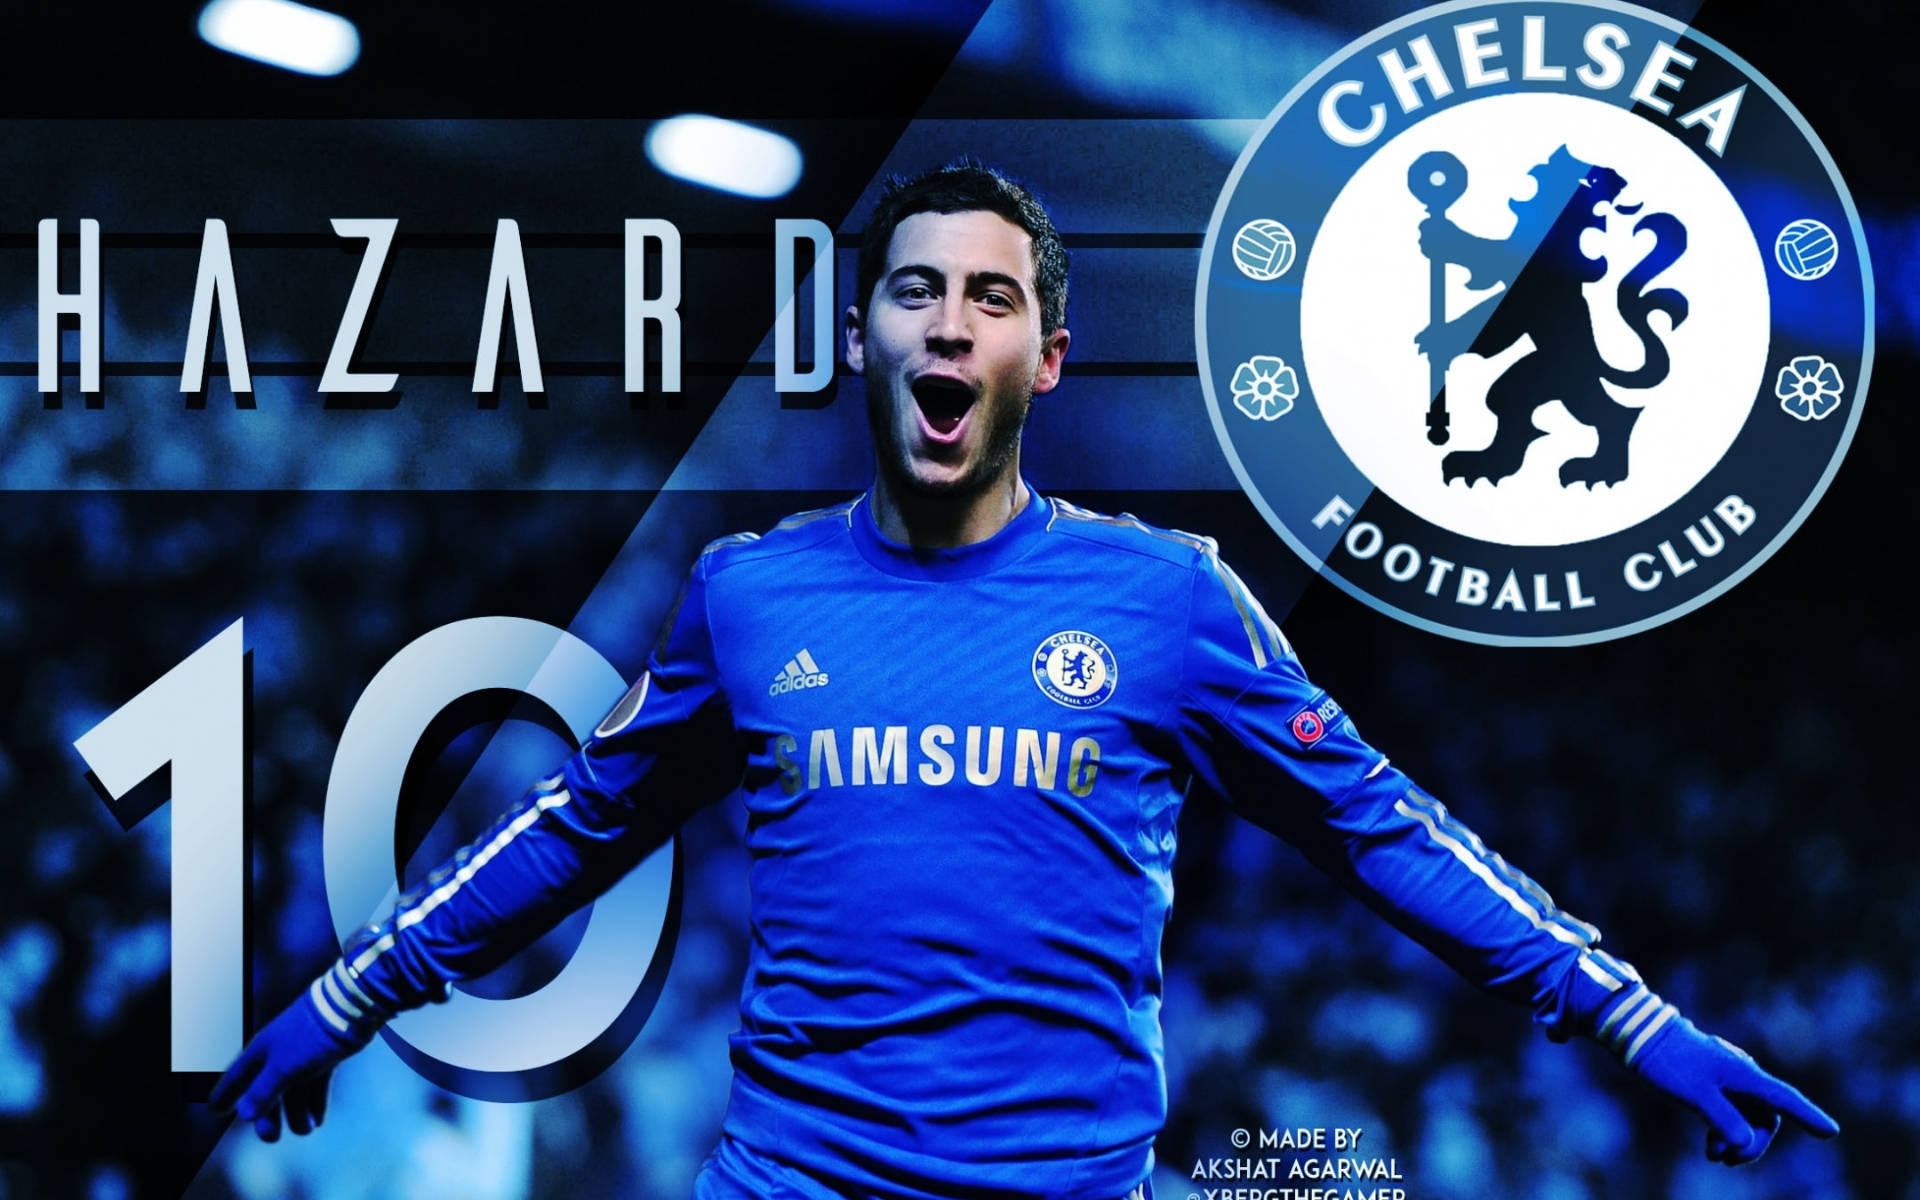 Chelsea Hazard Digital Cover Background